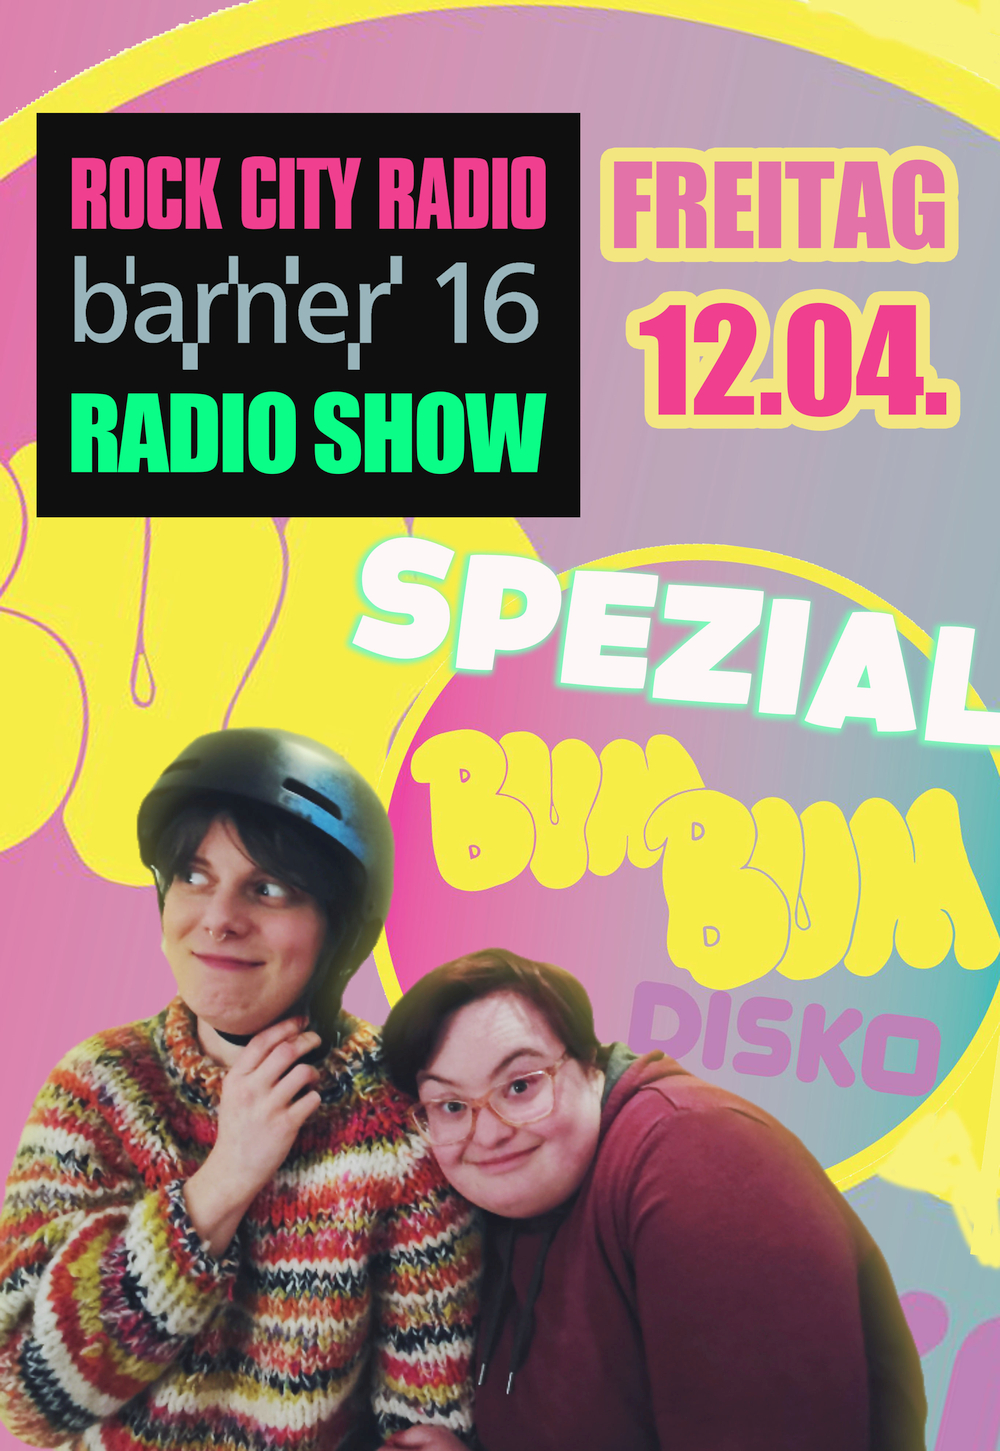 barner 16 Radio Show - Bum Bum Disko